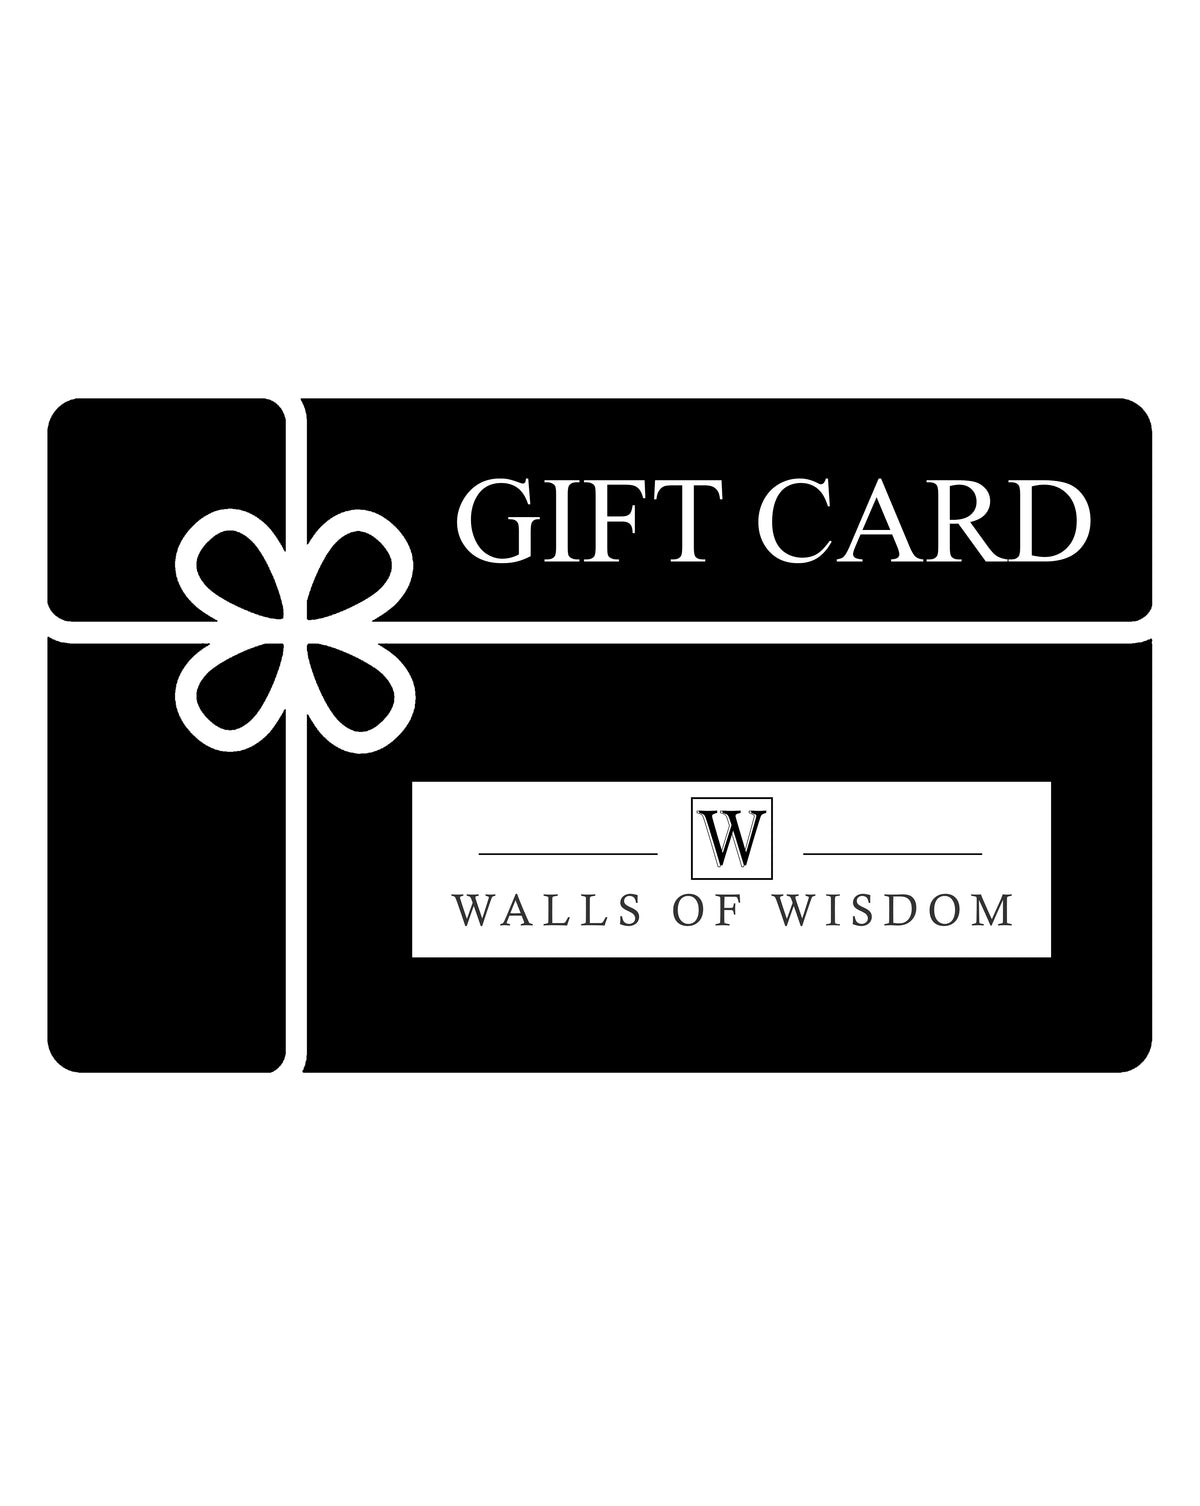 Walls of Wisdom - Gift Card